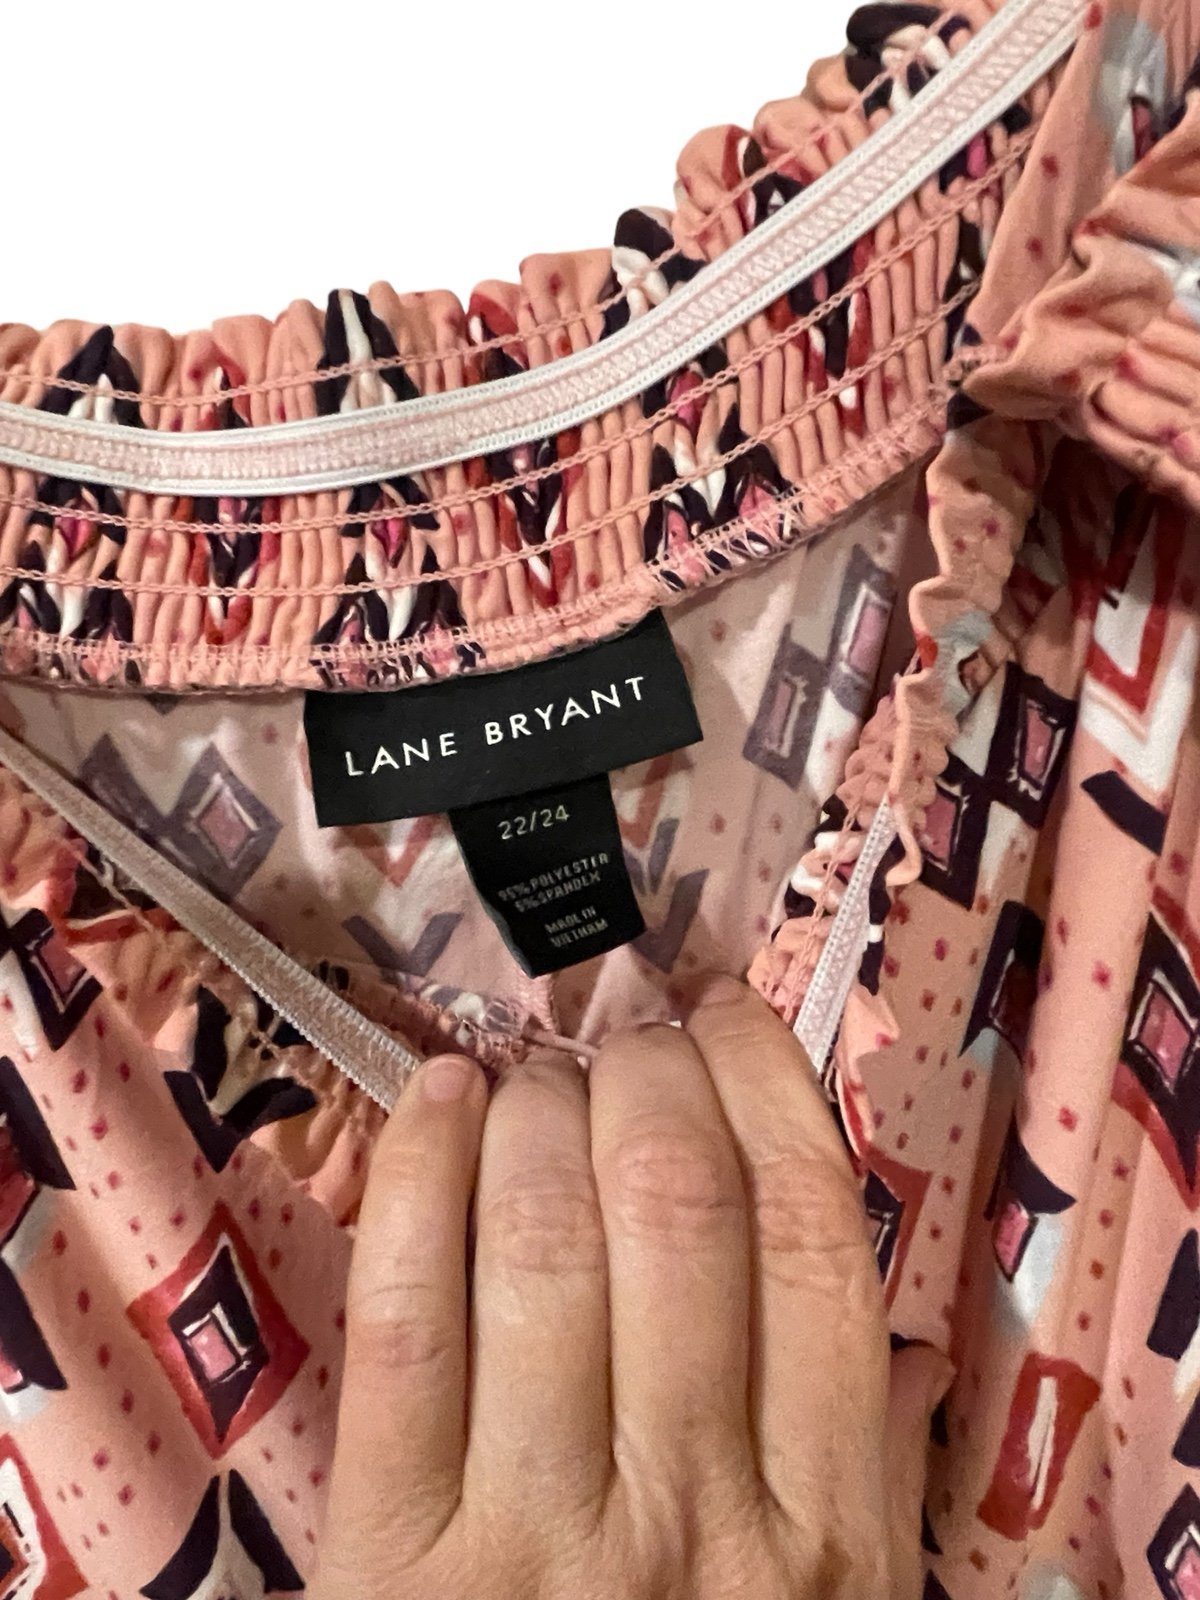 Classic Lane Bryant pajama bottom pants size 22/24 NWOT hfPEyyT7J online store